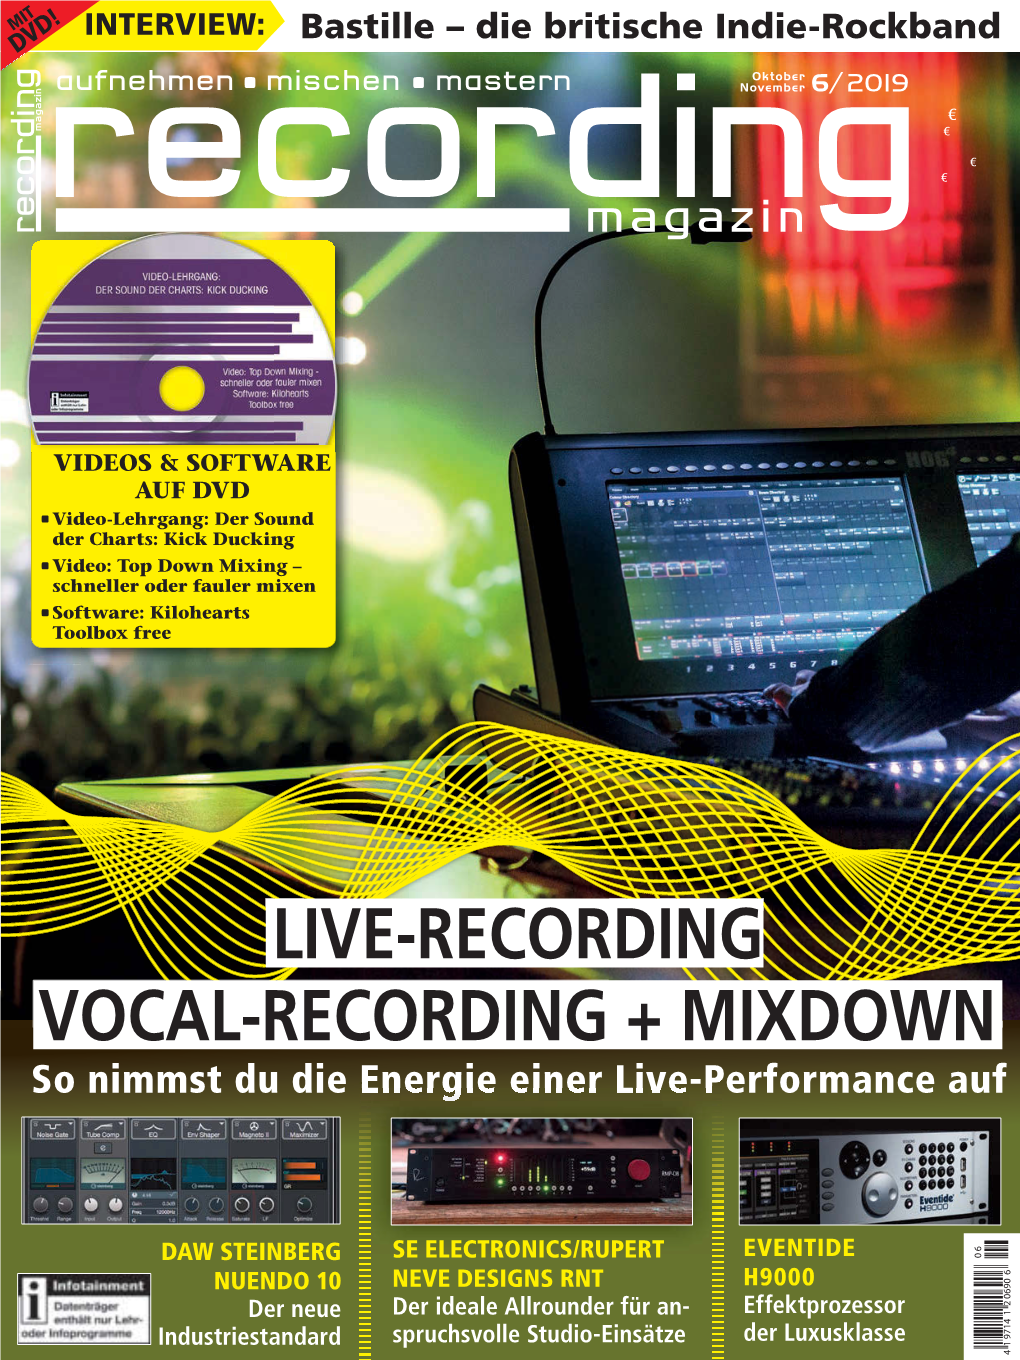 Live-Recording Vocal-Recording + Mixdown